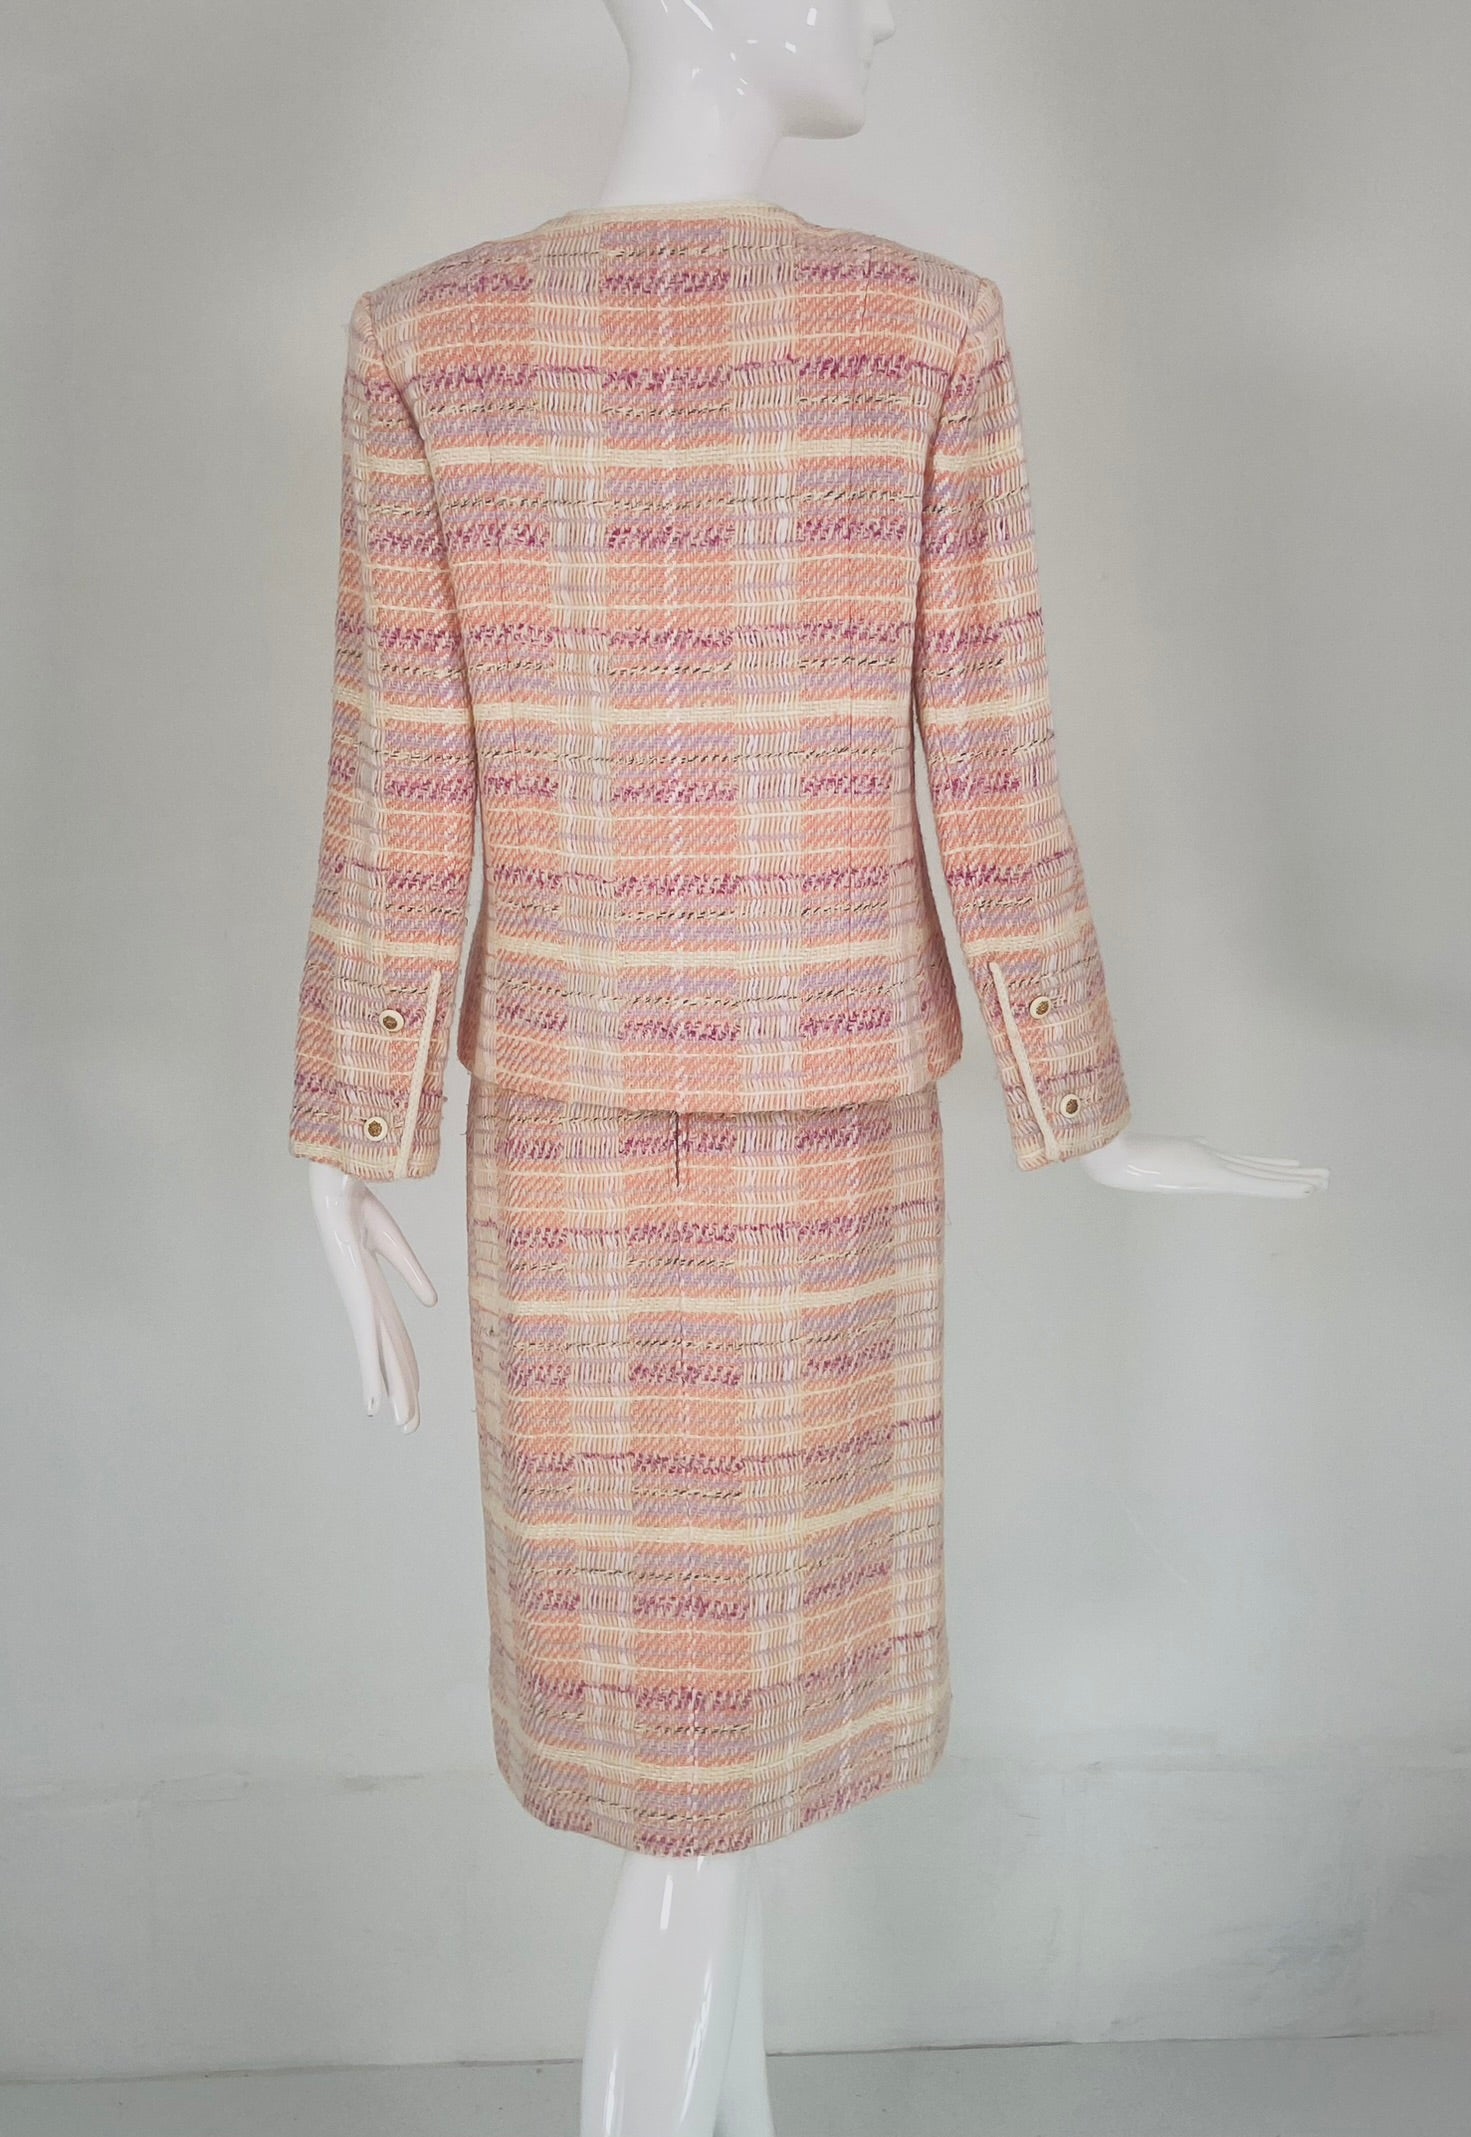 Chanel Creations Pastel Peach Cream Lavender Tweed Skirt Suit 1970s